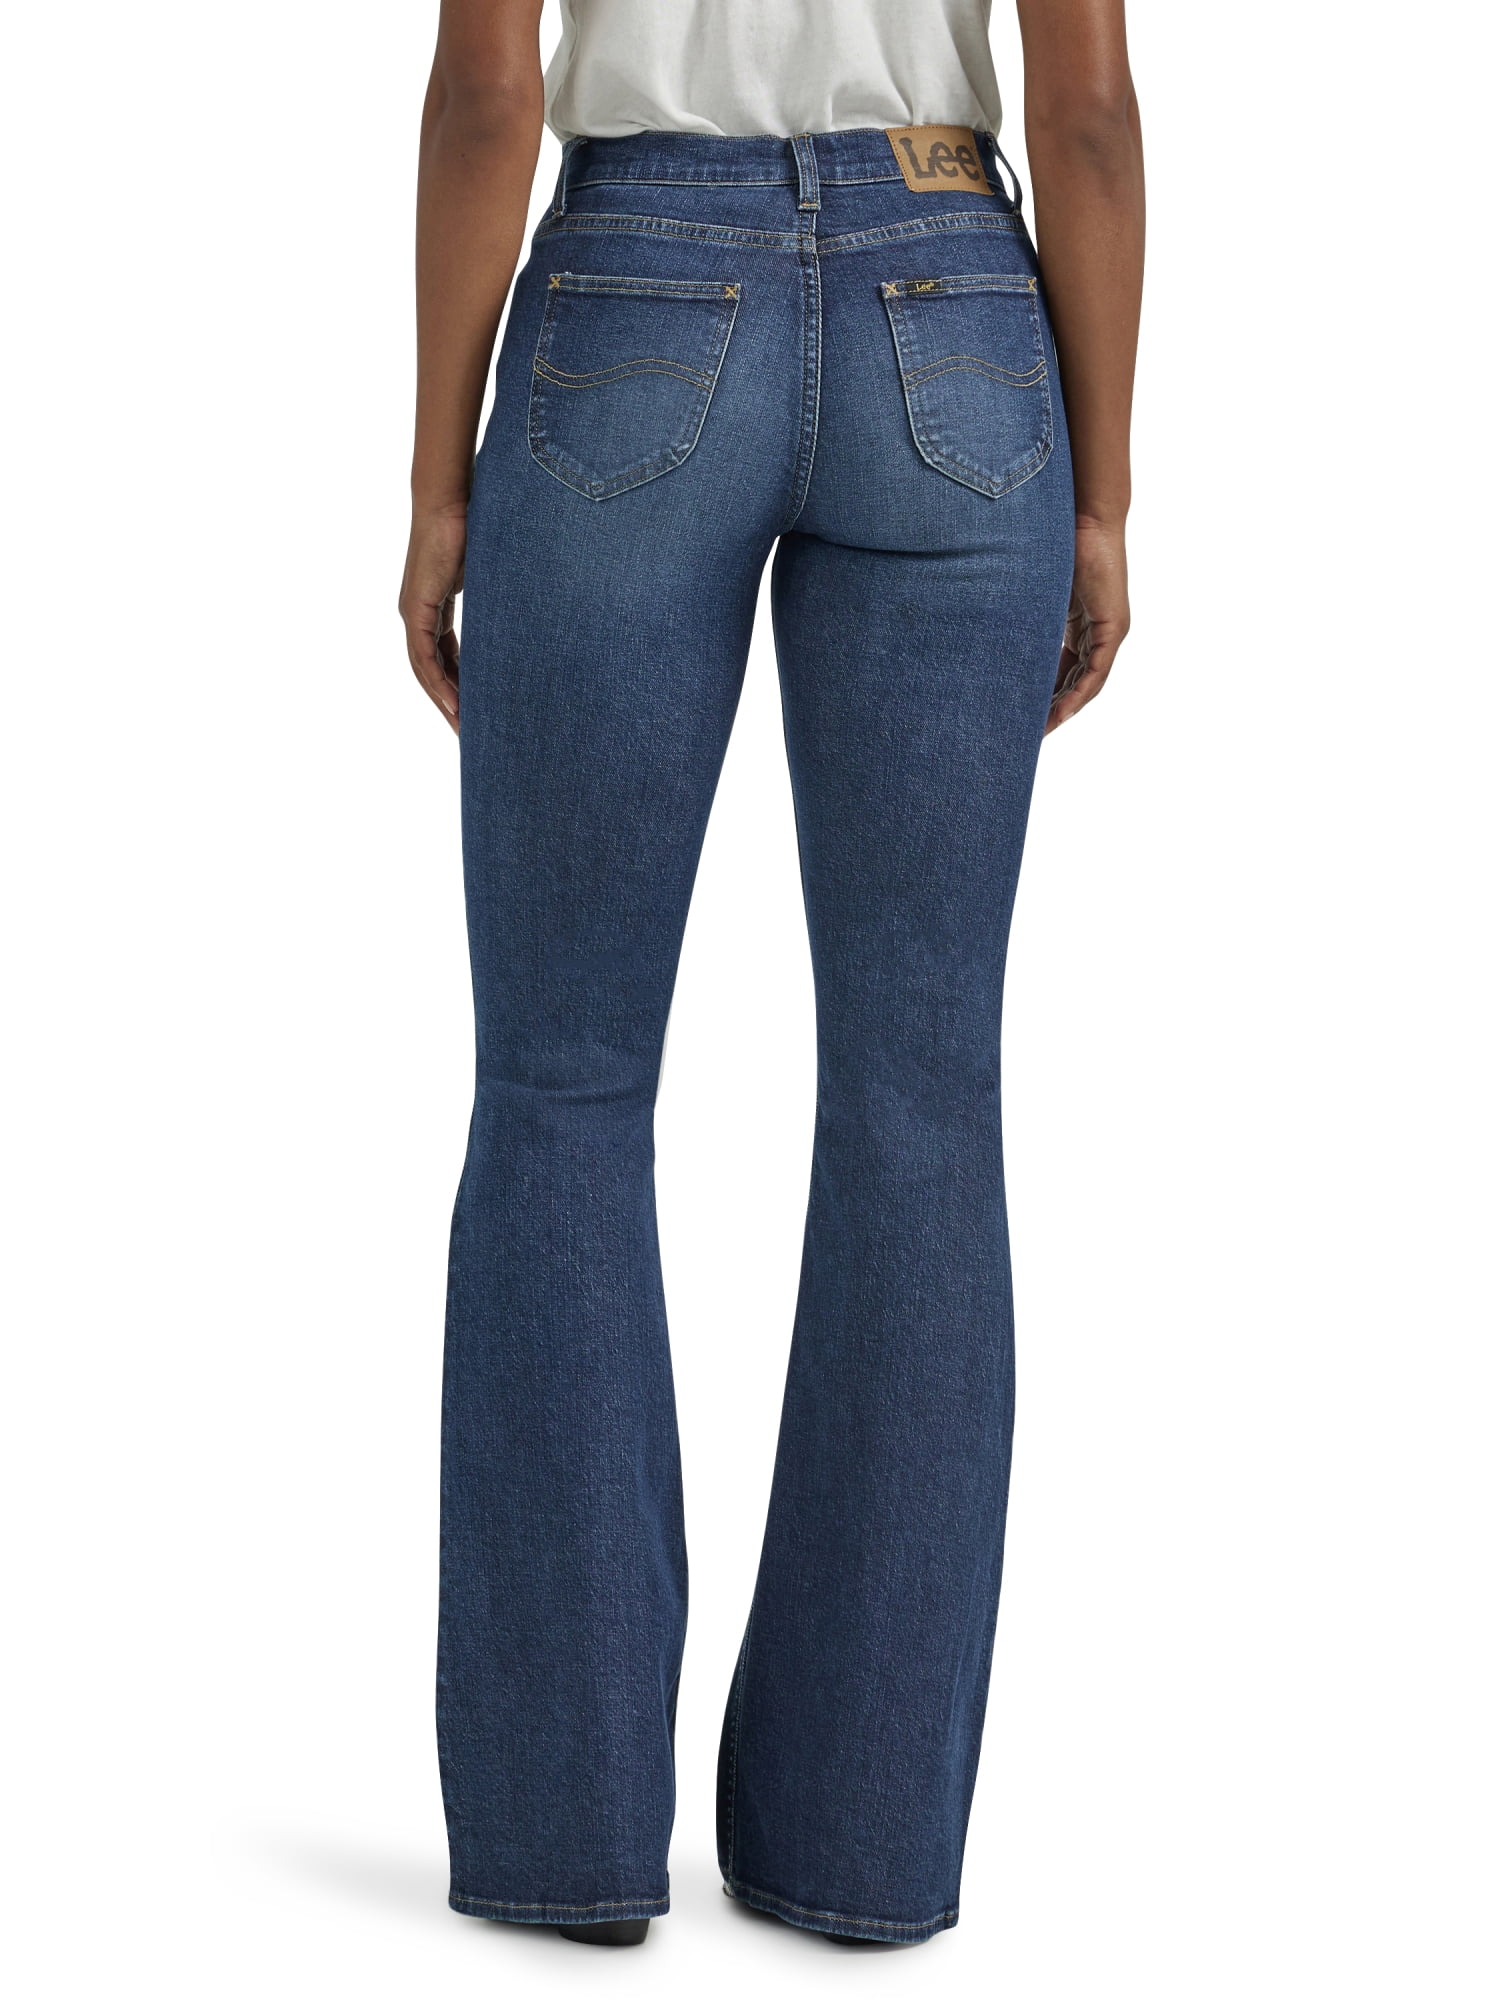 Lee Women's Legendary Mid Rise Flare Jean, Blurred Darks, 10 Short at   Women's Jeans store